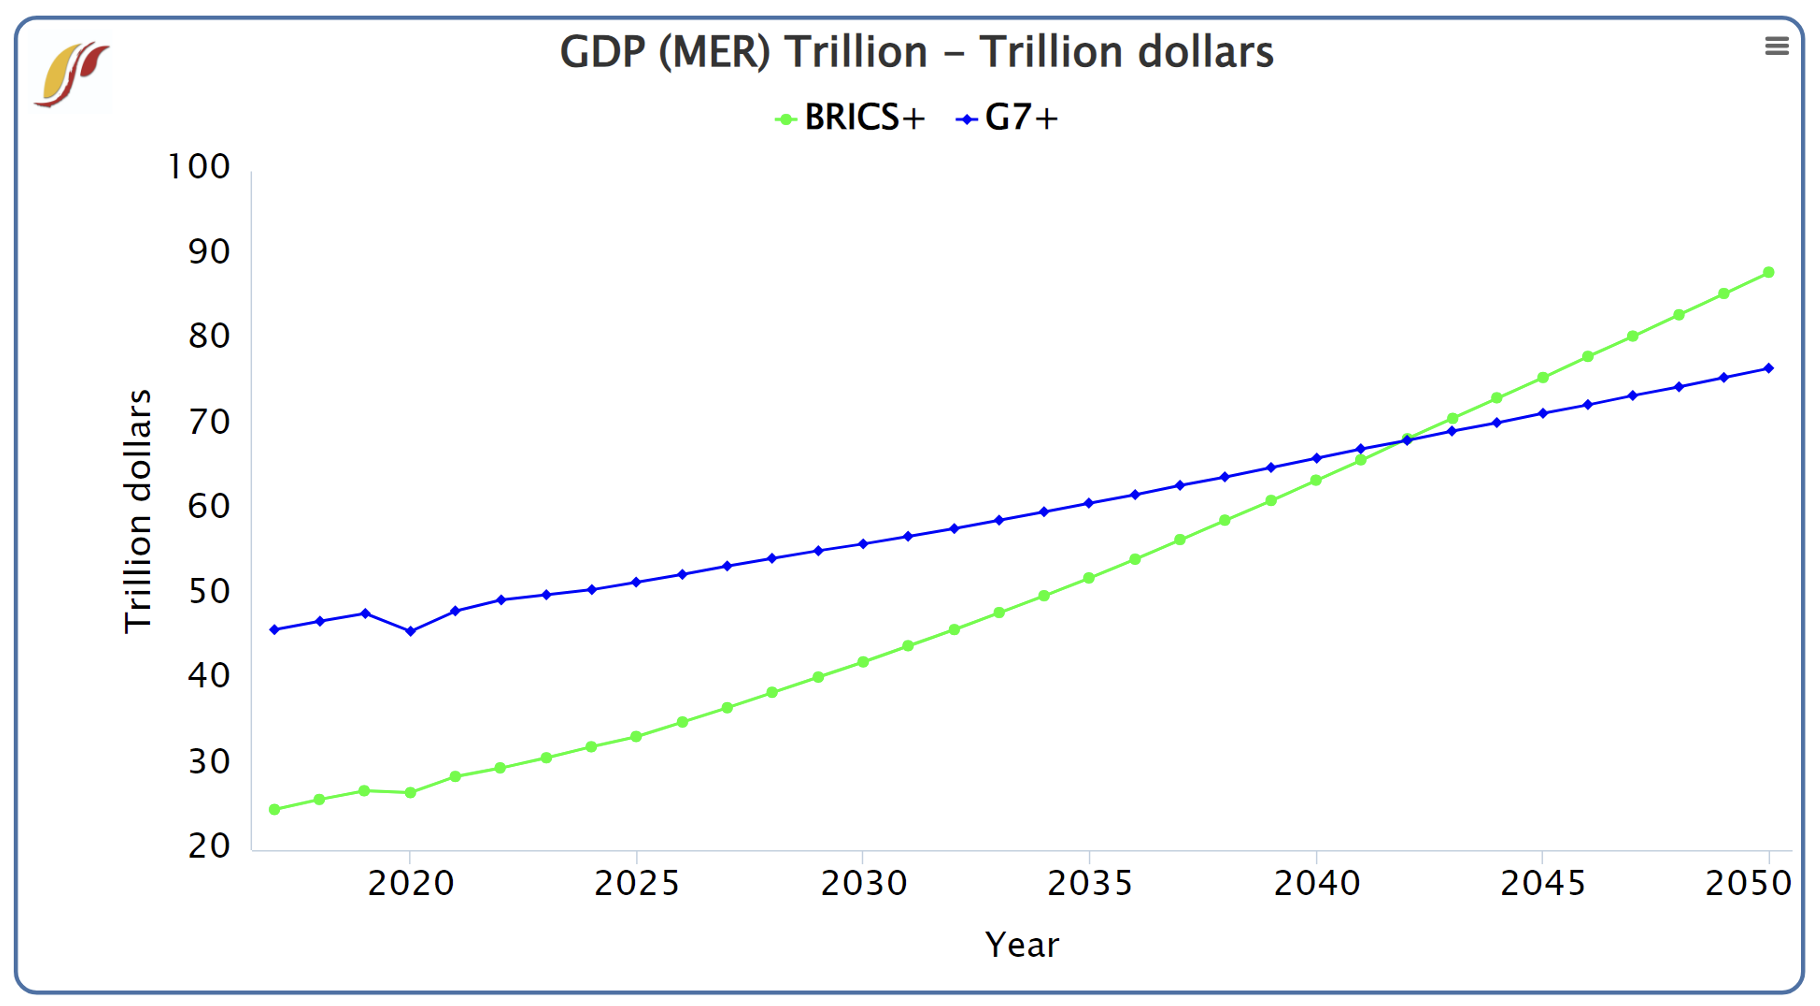 GDP (MER) trillion - trillion dollars